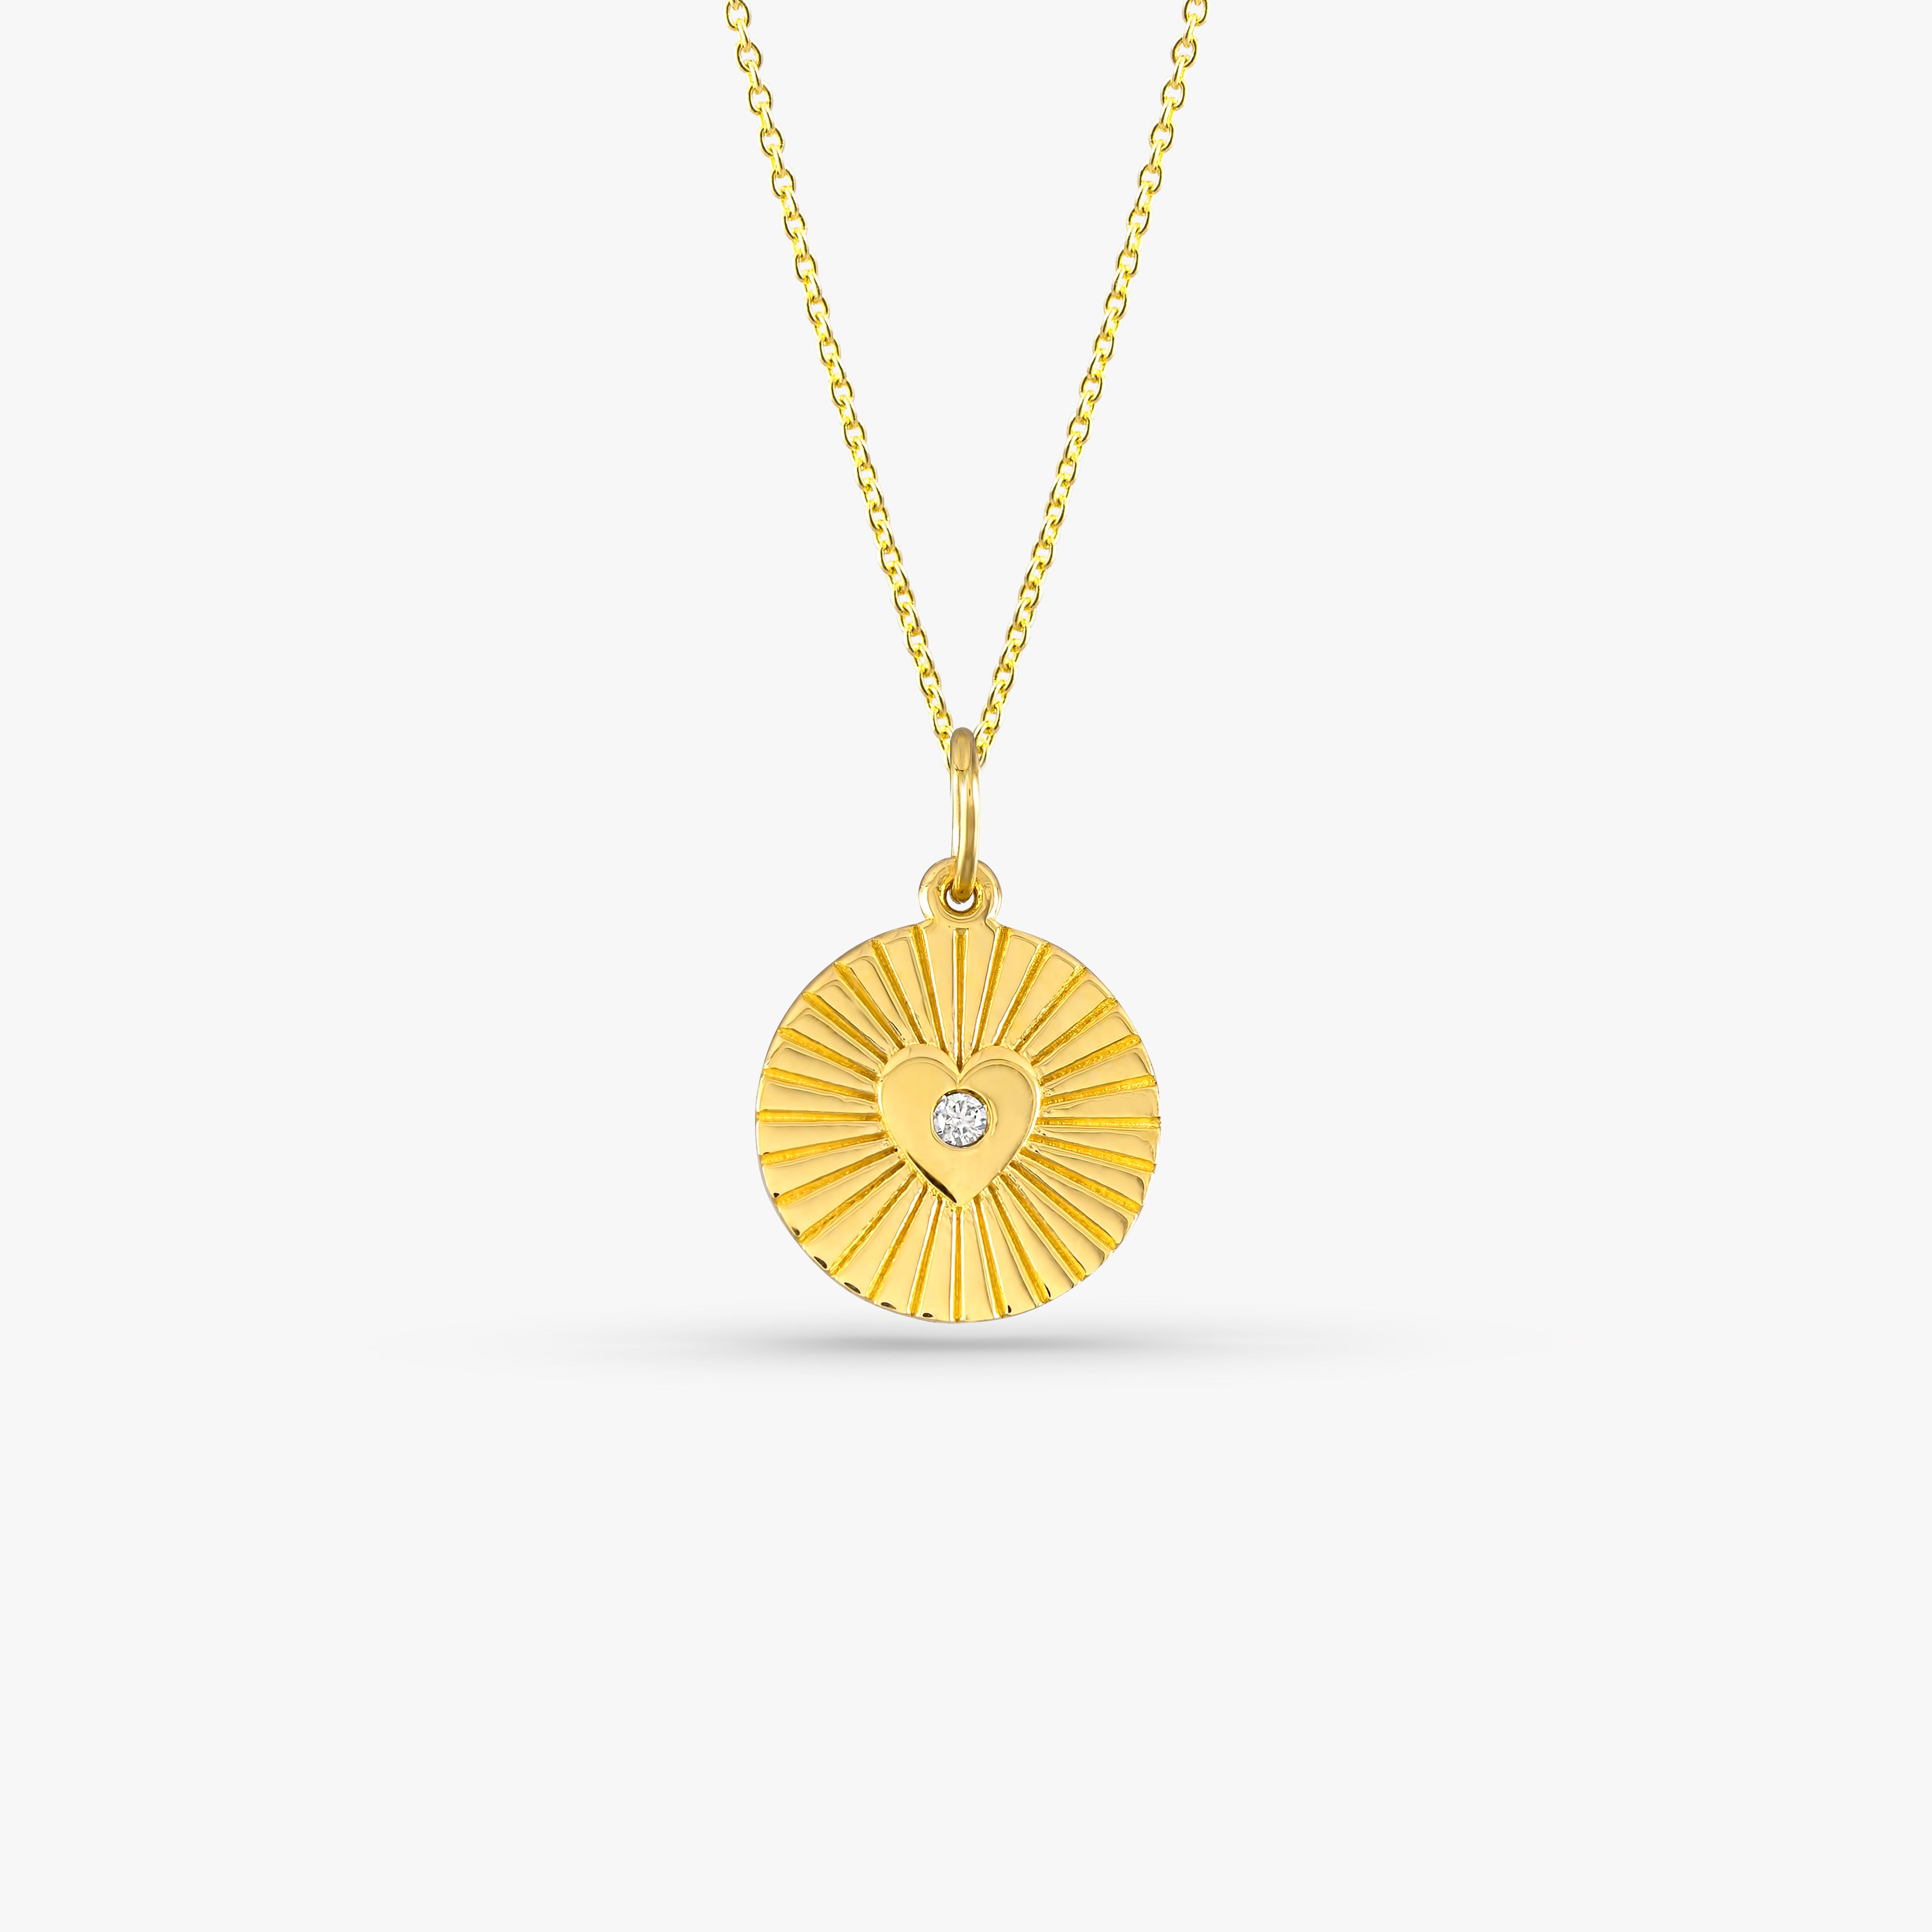 Diamond Heart Charm Necklace in 14K Yellow Gold / MY MINI HEART